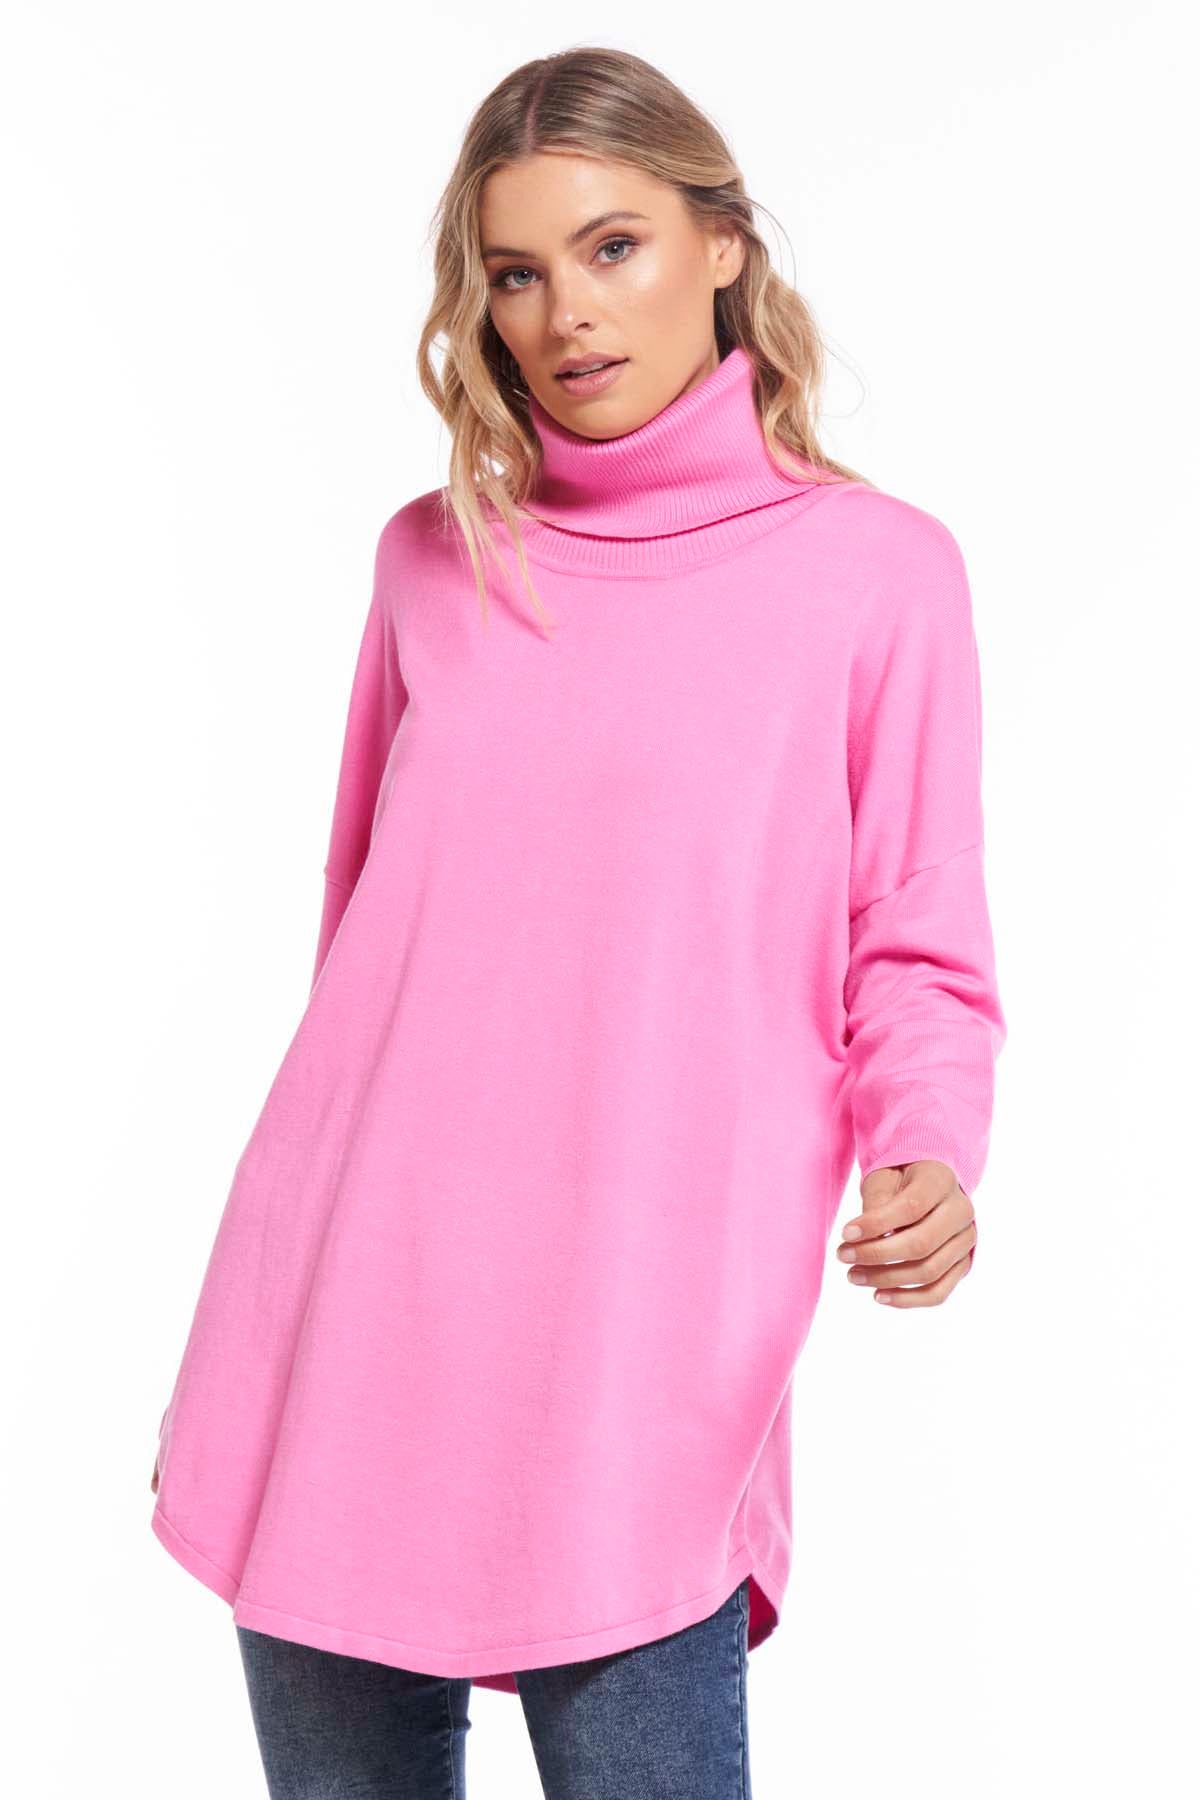 Betty Basics Fleur Knit Jumper in Candy Pink - Hey Sara